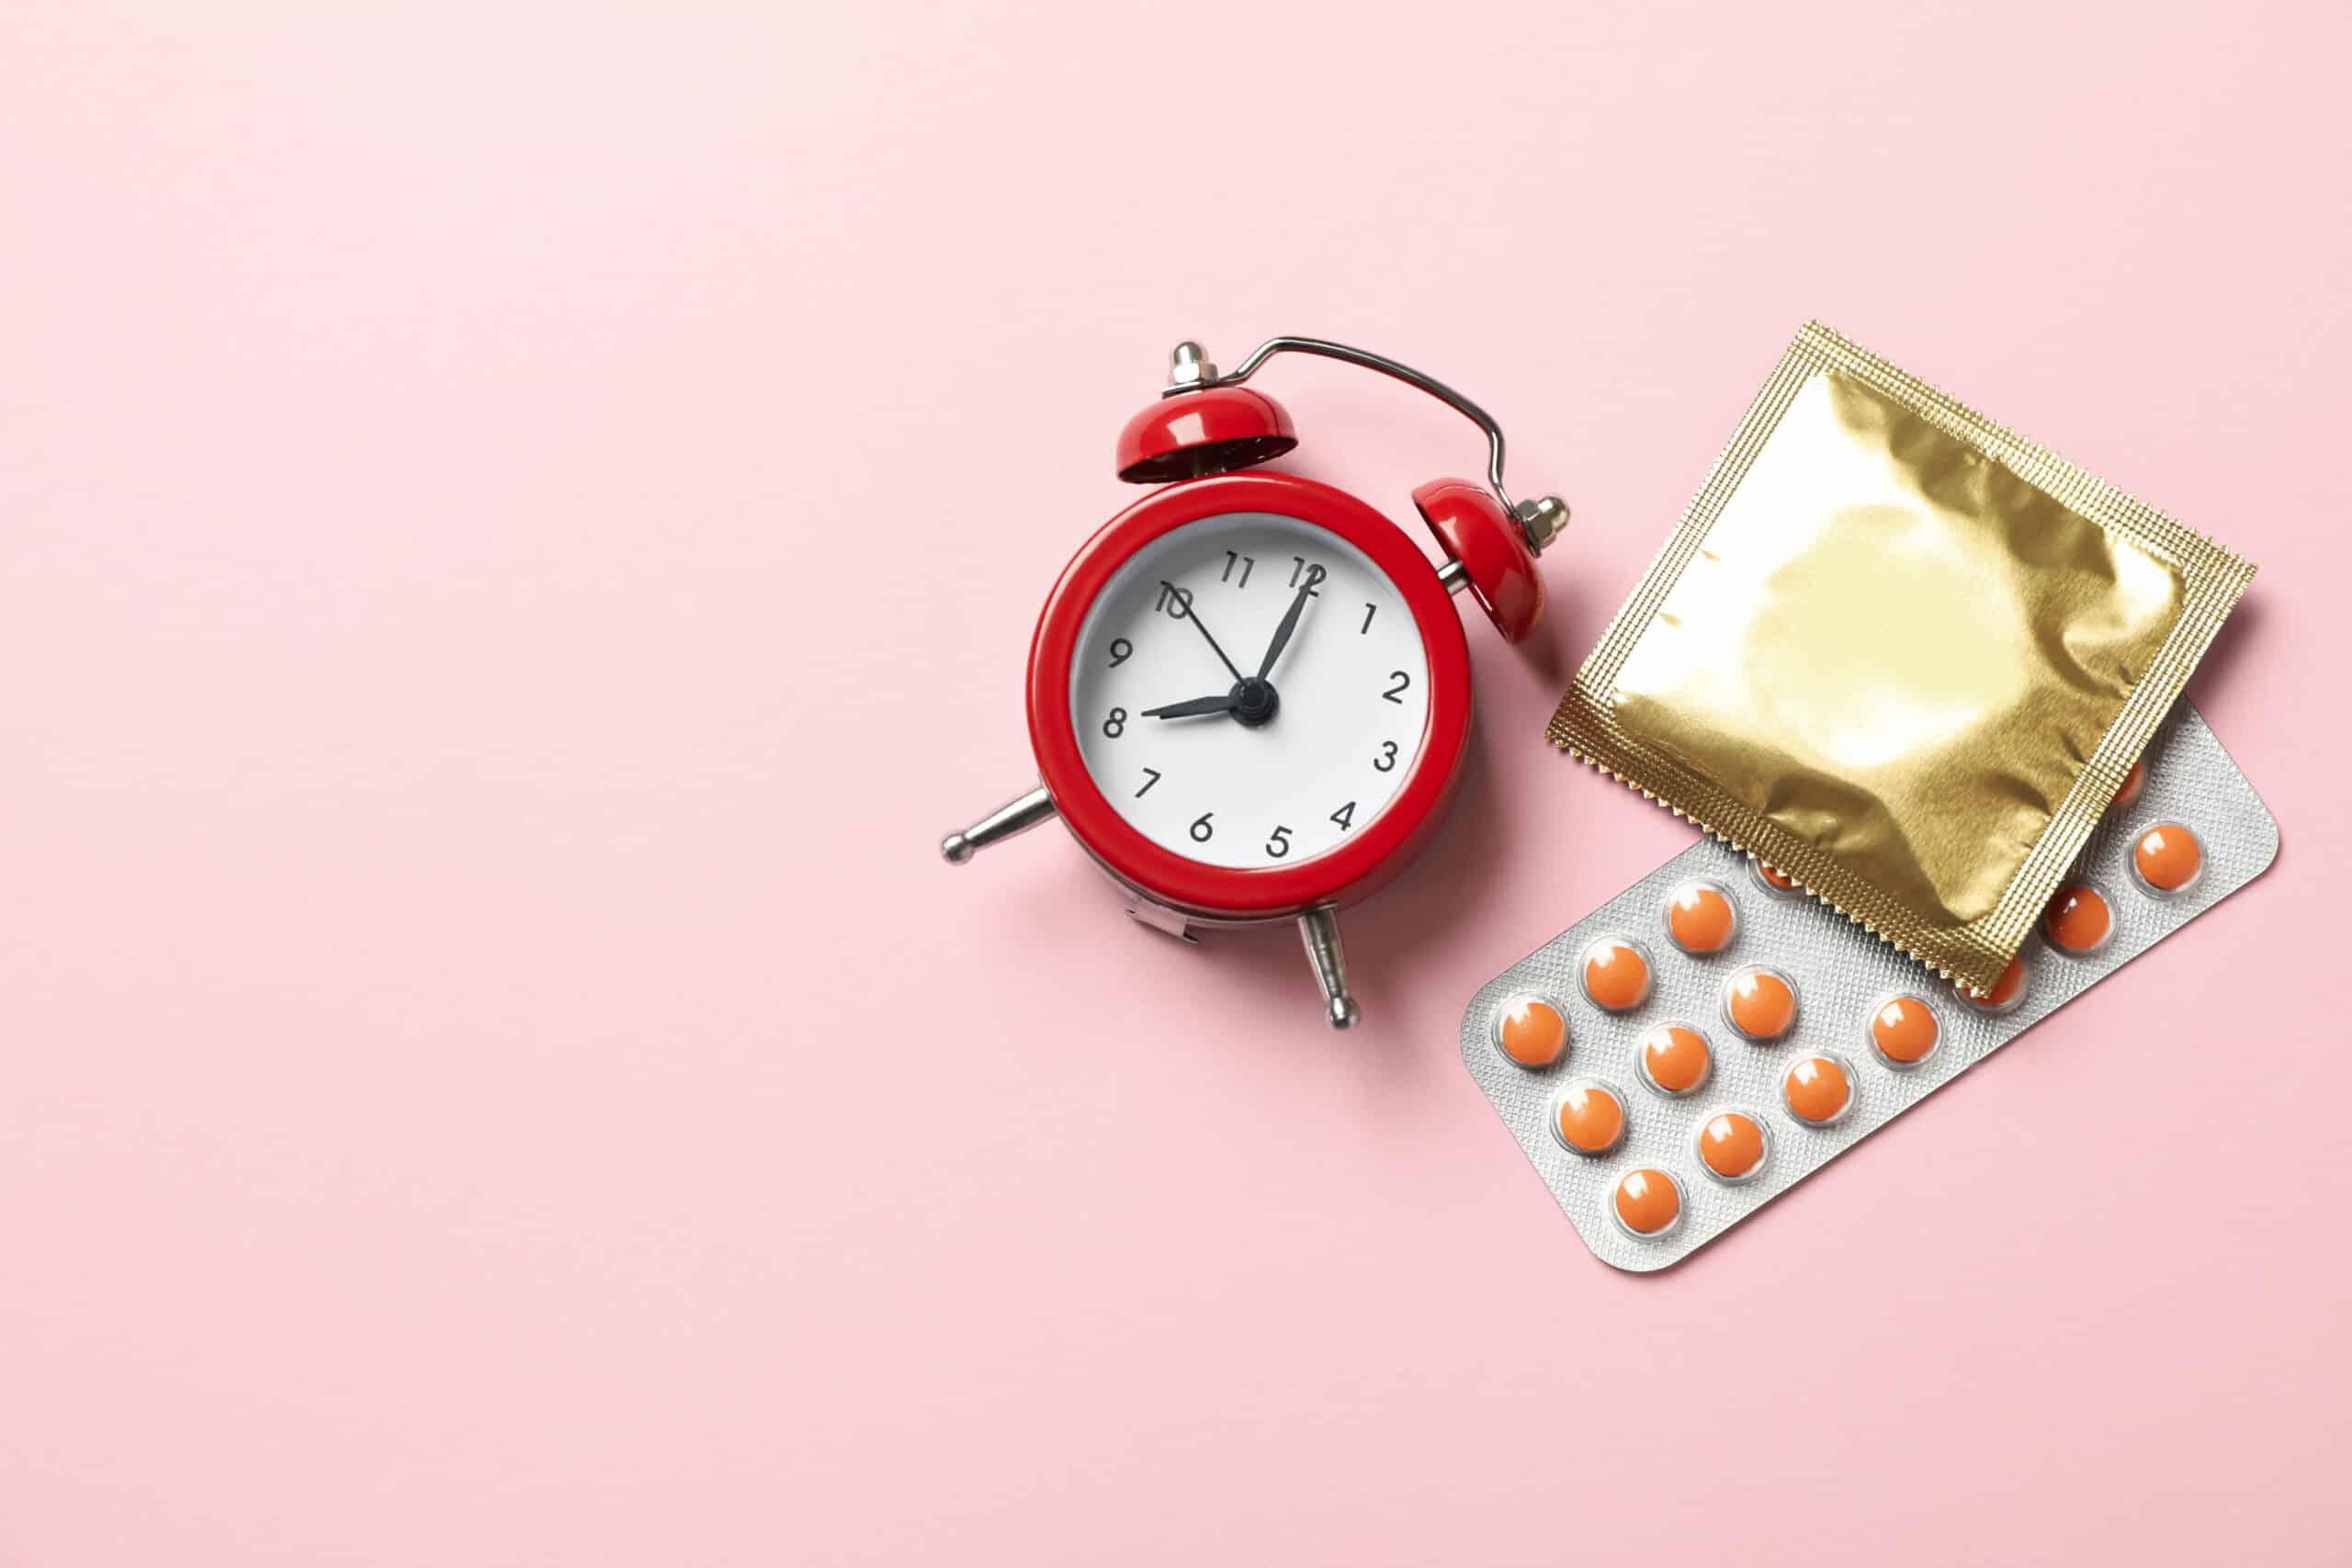 alarm clock condom and pills on pink background 2021 08 31 23 38 33 utc scaled